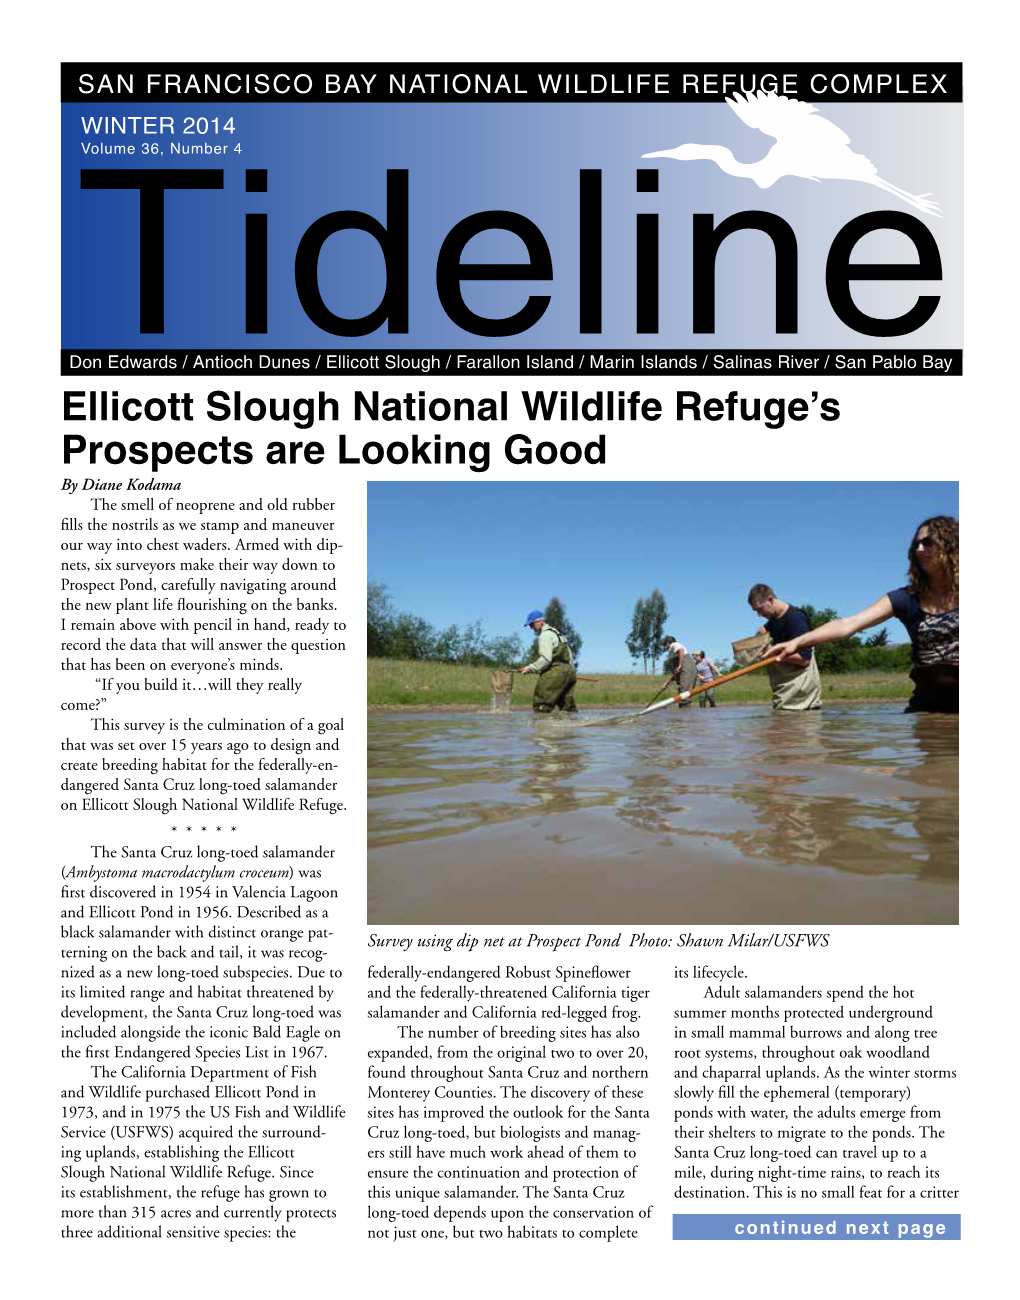 Ellicott Slough National Wildlife Refuge's Prospects Are Looking Good